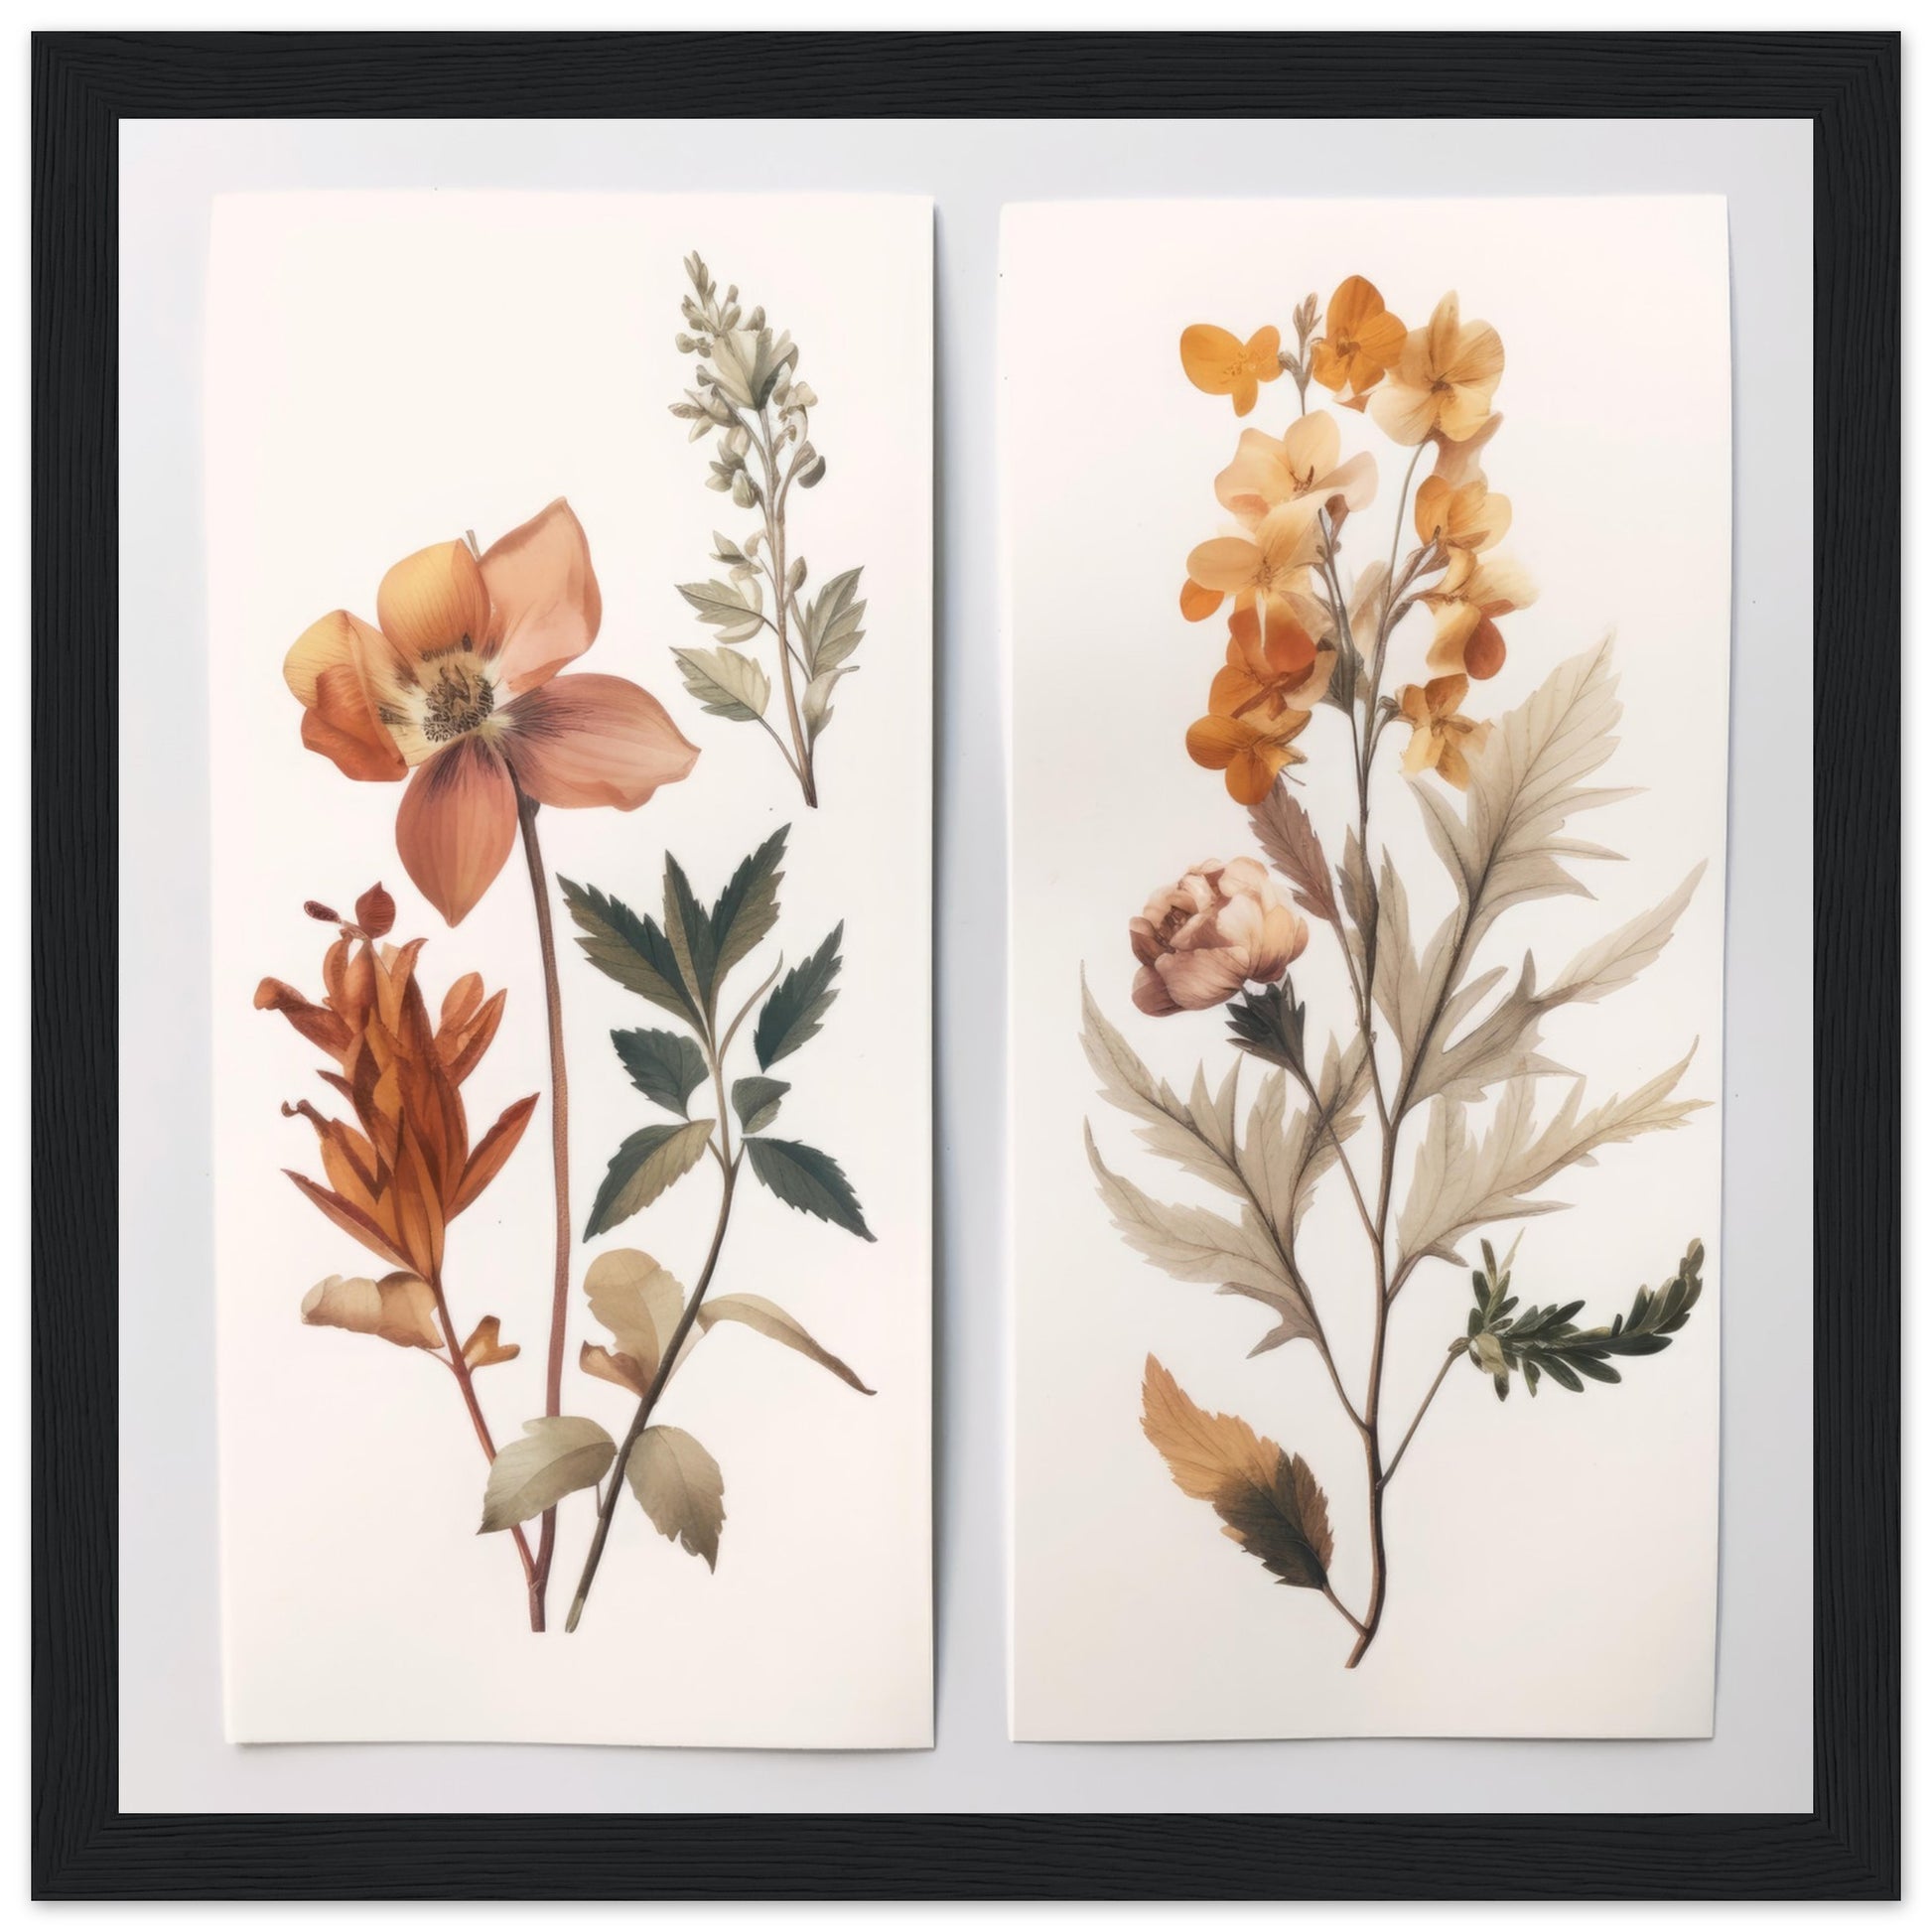 Elegance - Botanical Artwork #1- Print Room Ltd Black frame 50x50 cm / 20x20"